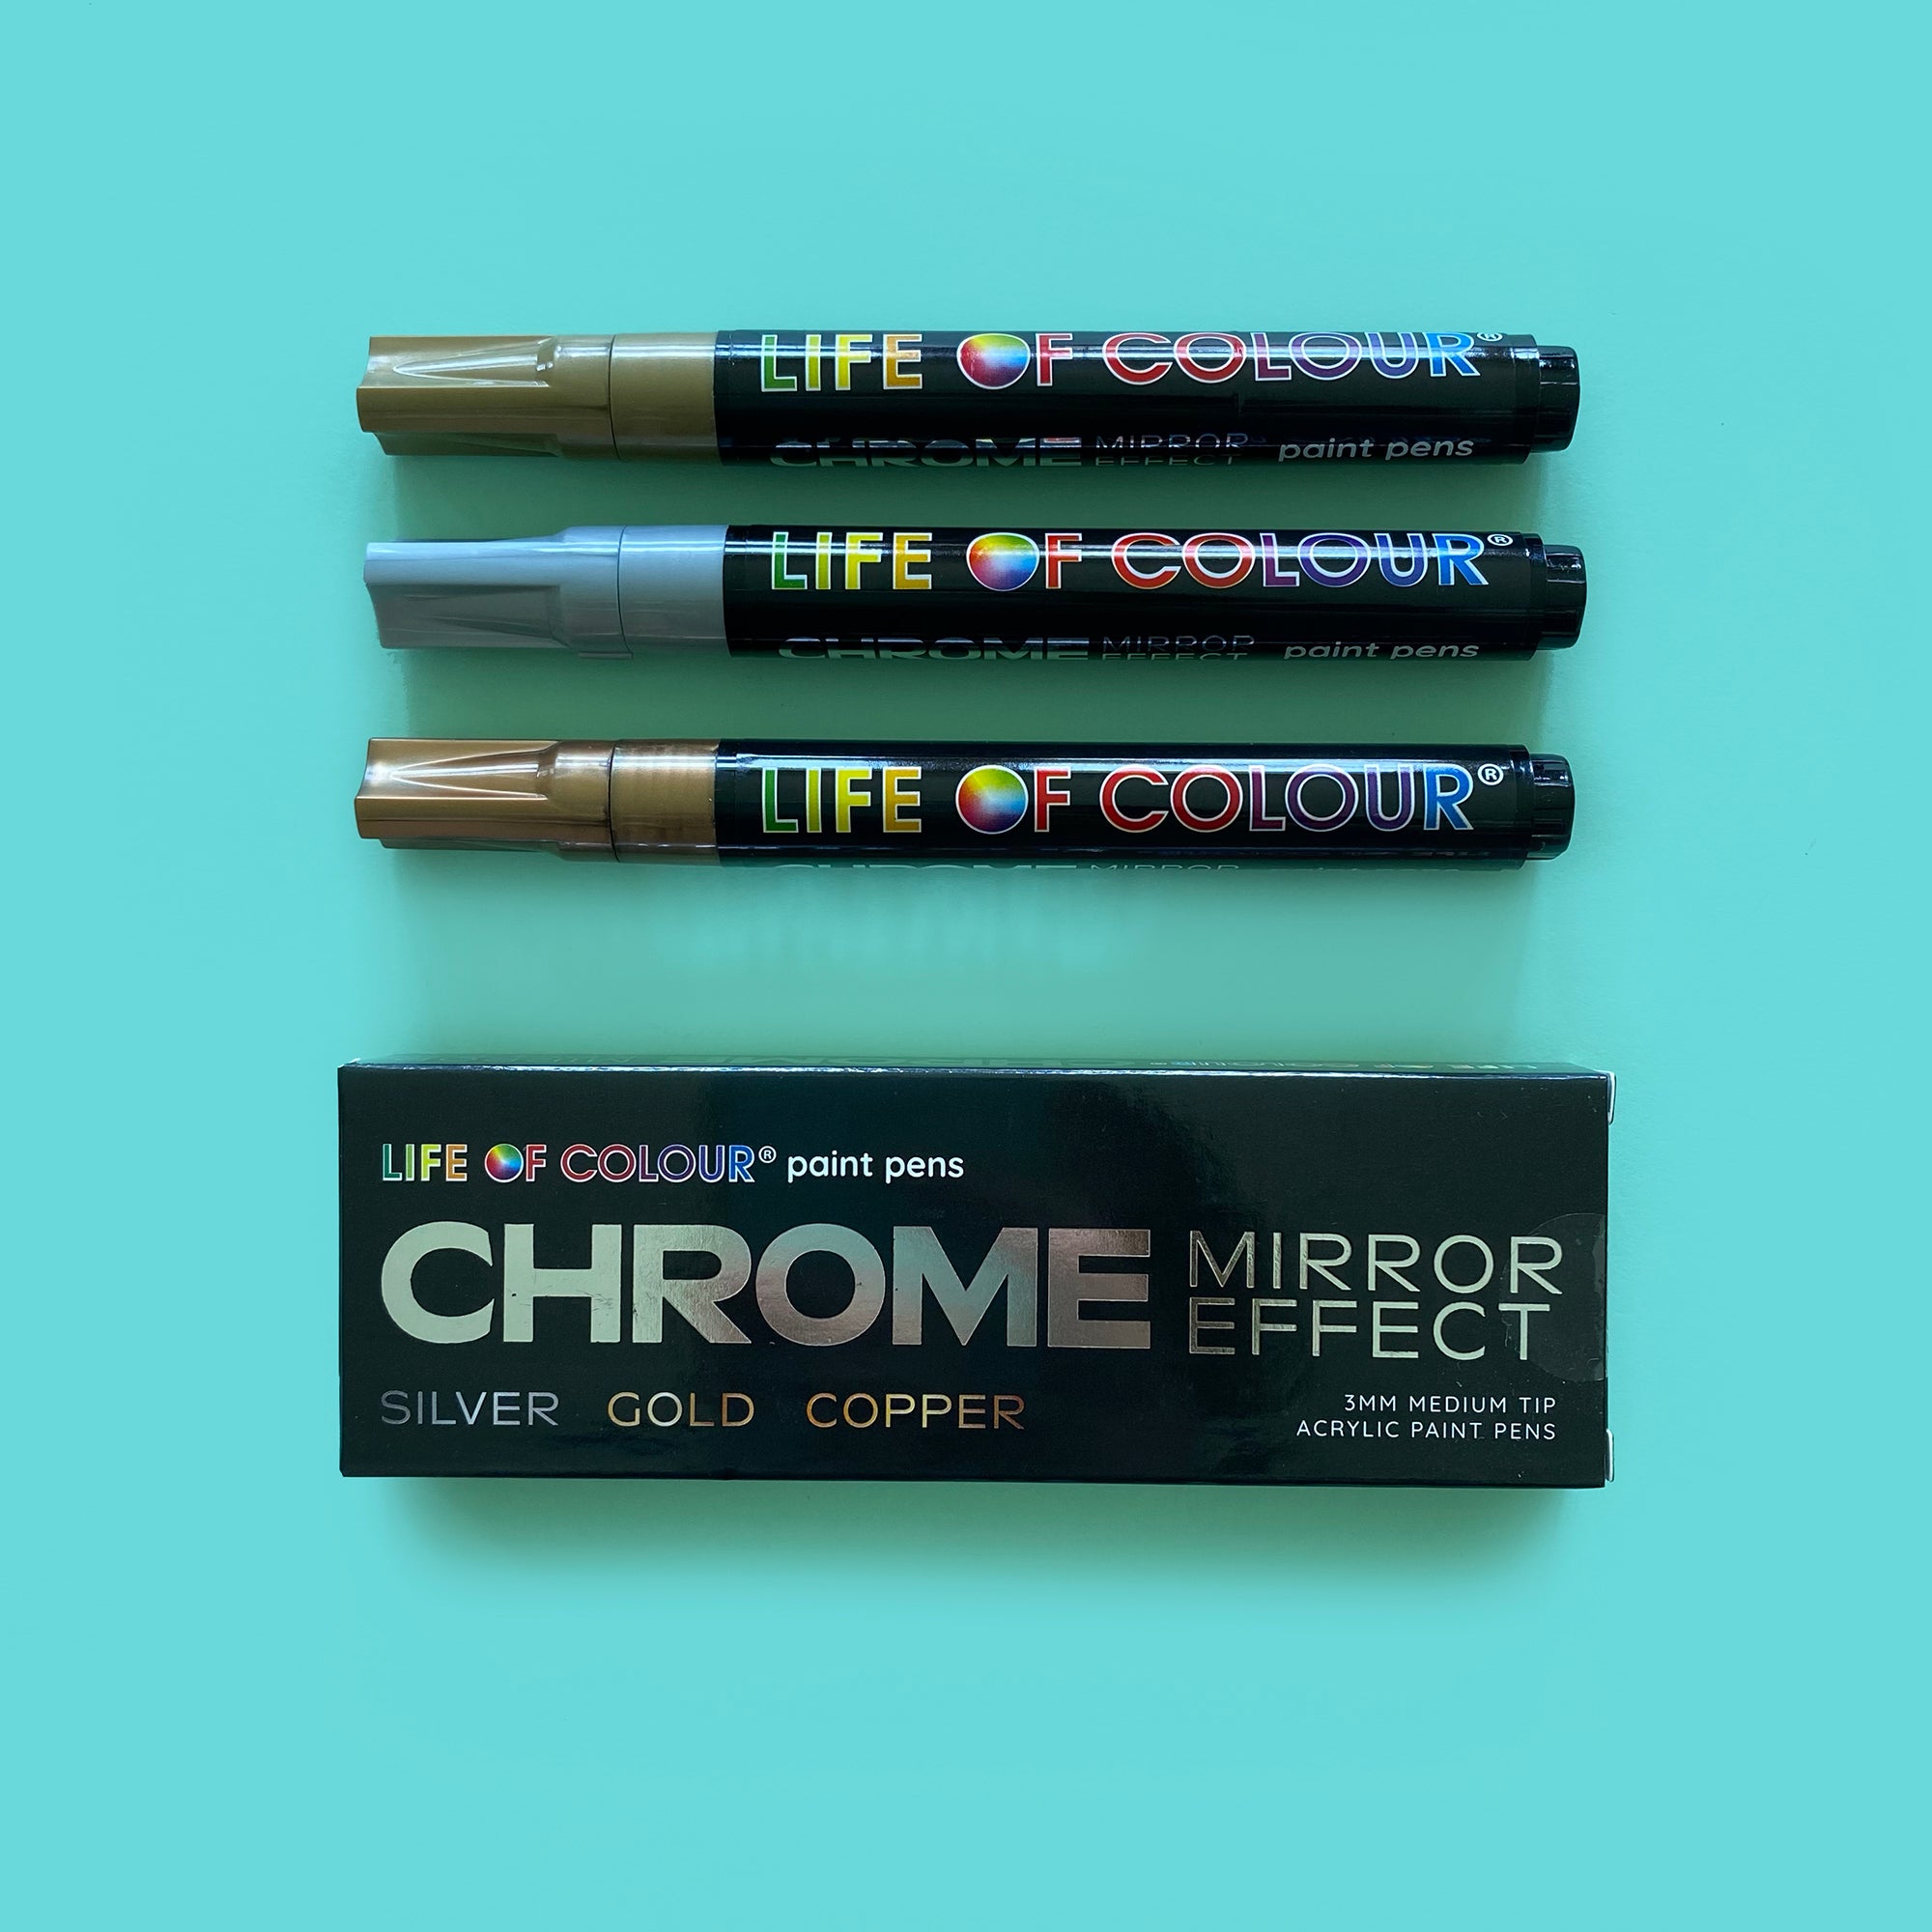 Silver Art Liquid Mirror Chrome Highlight Marker Pen - DIY